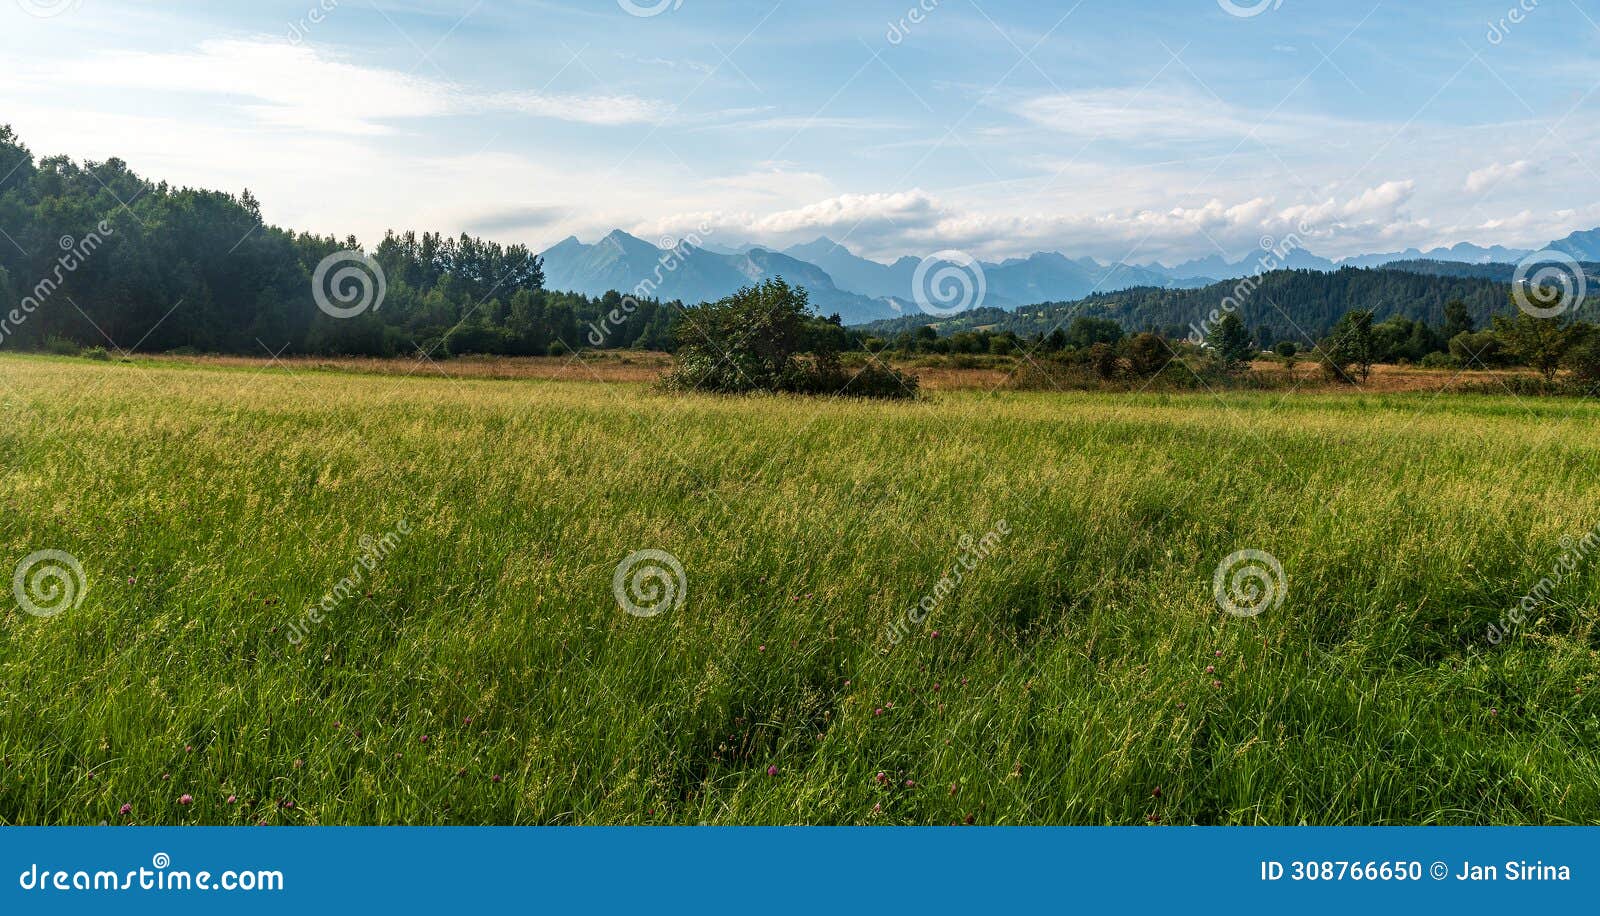 view to tatra mountains from sarnowska grapa hill above jurgow village in poland